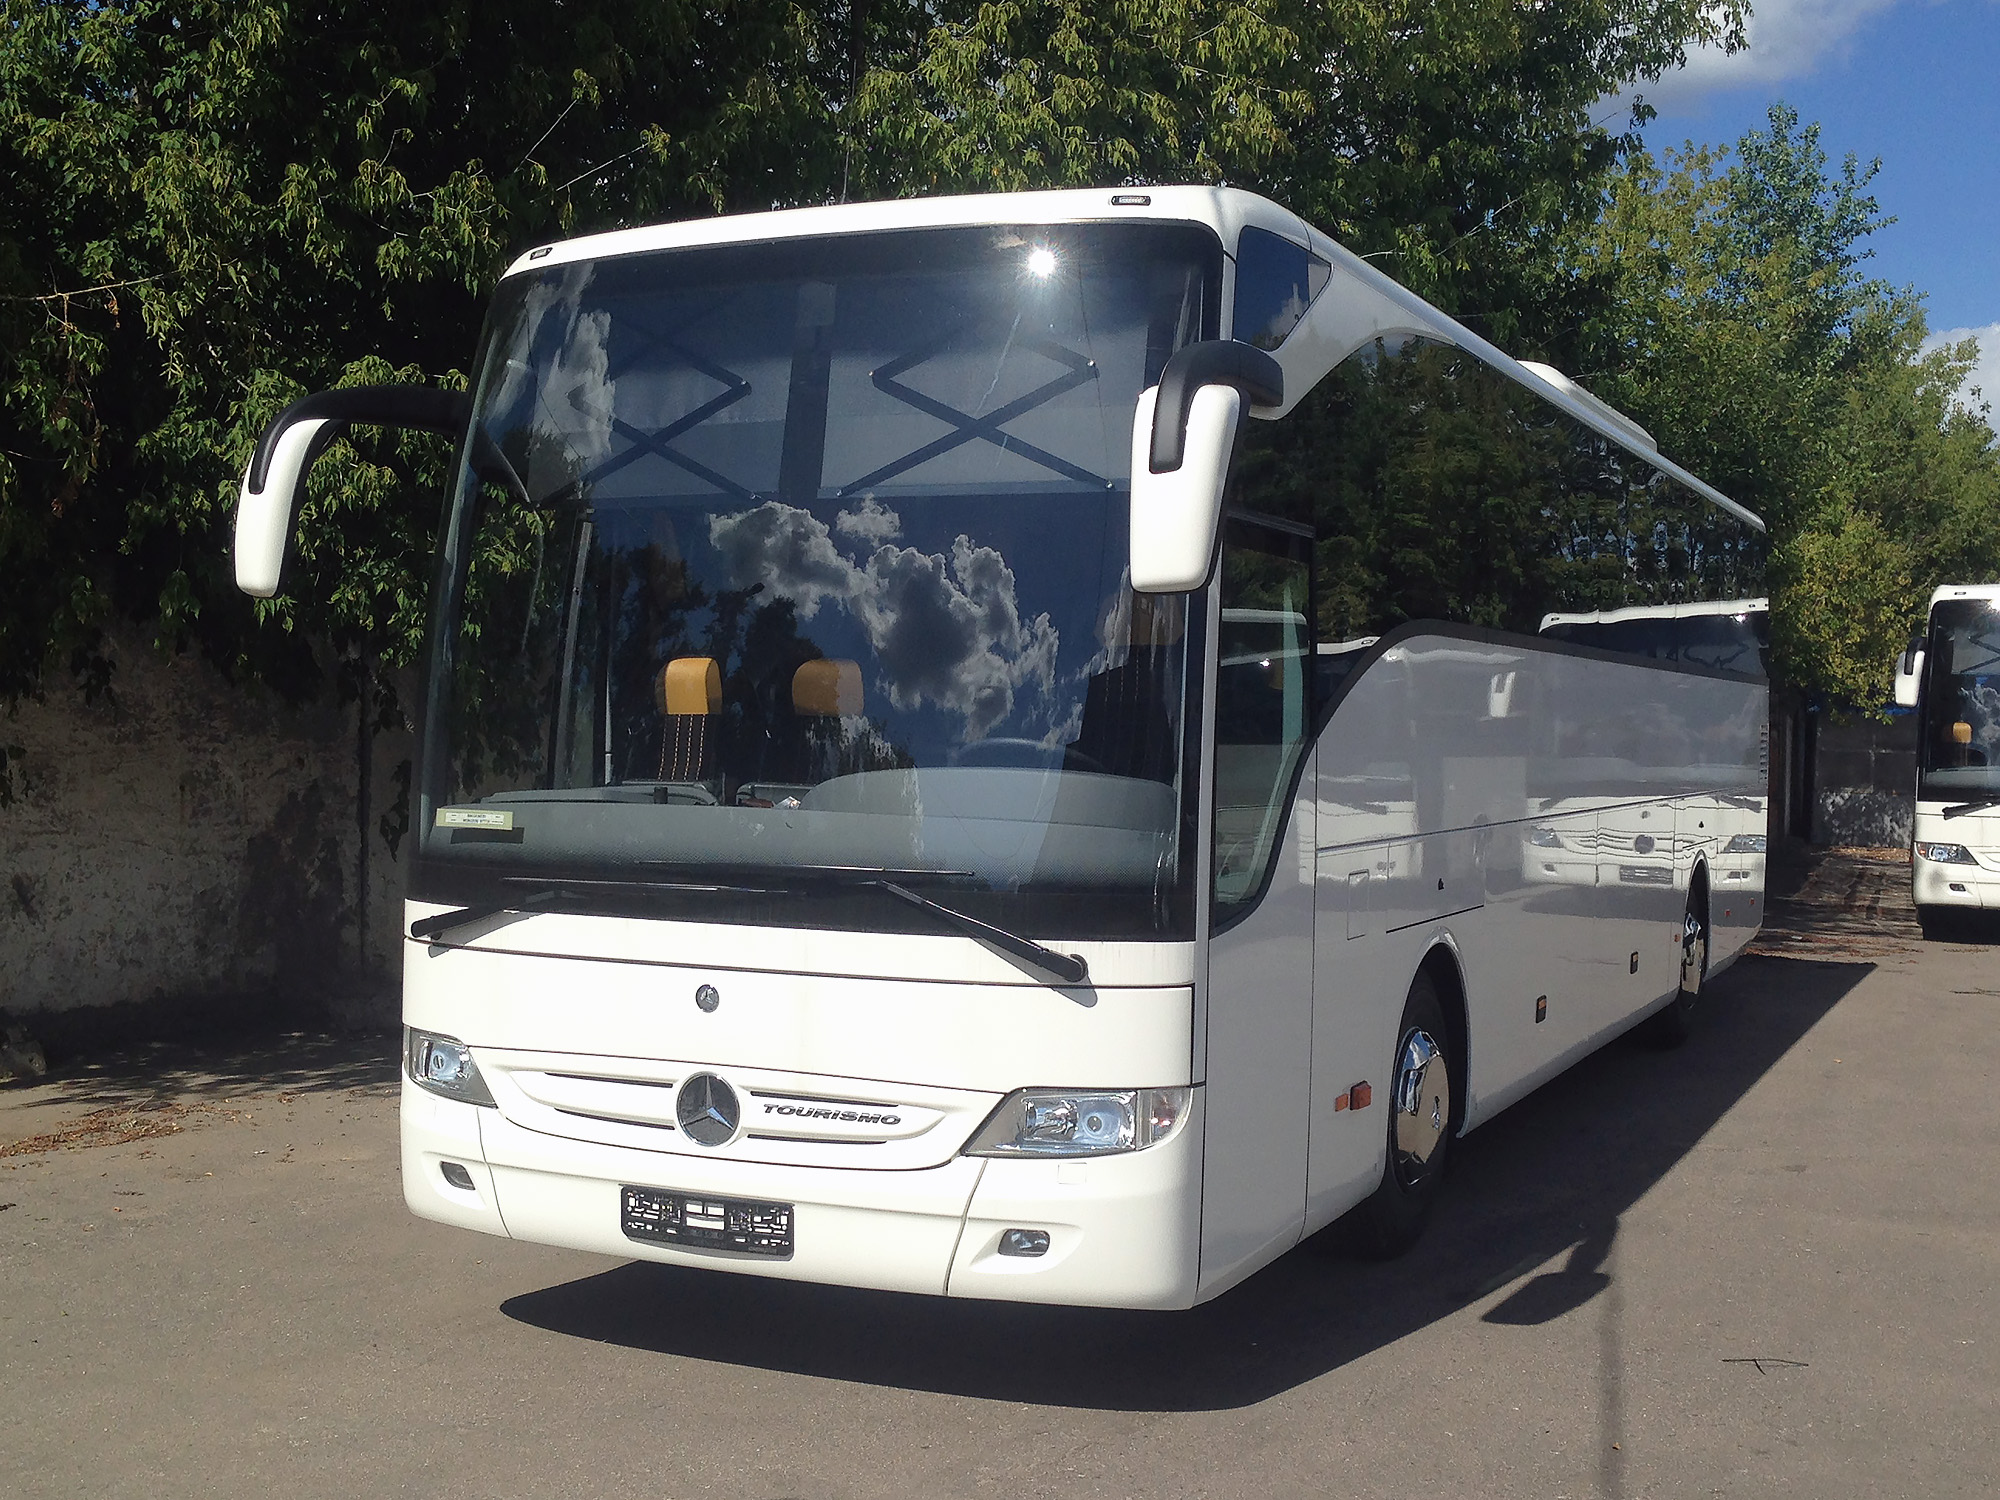 ЯрКамп-Лизинг передал в лизинг два автобуса MERCEDES-BENZ TOURISMO 15 RHD